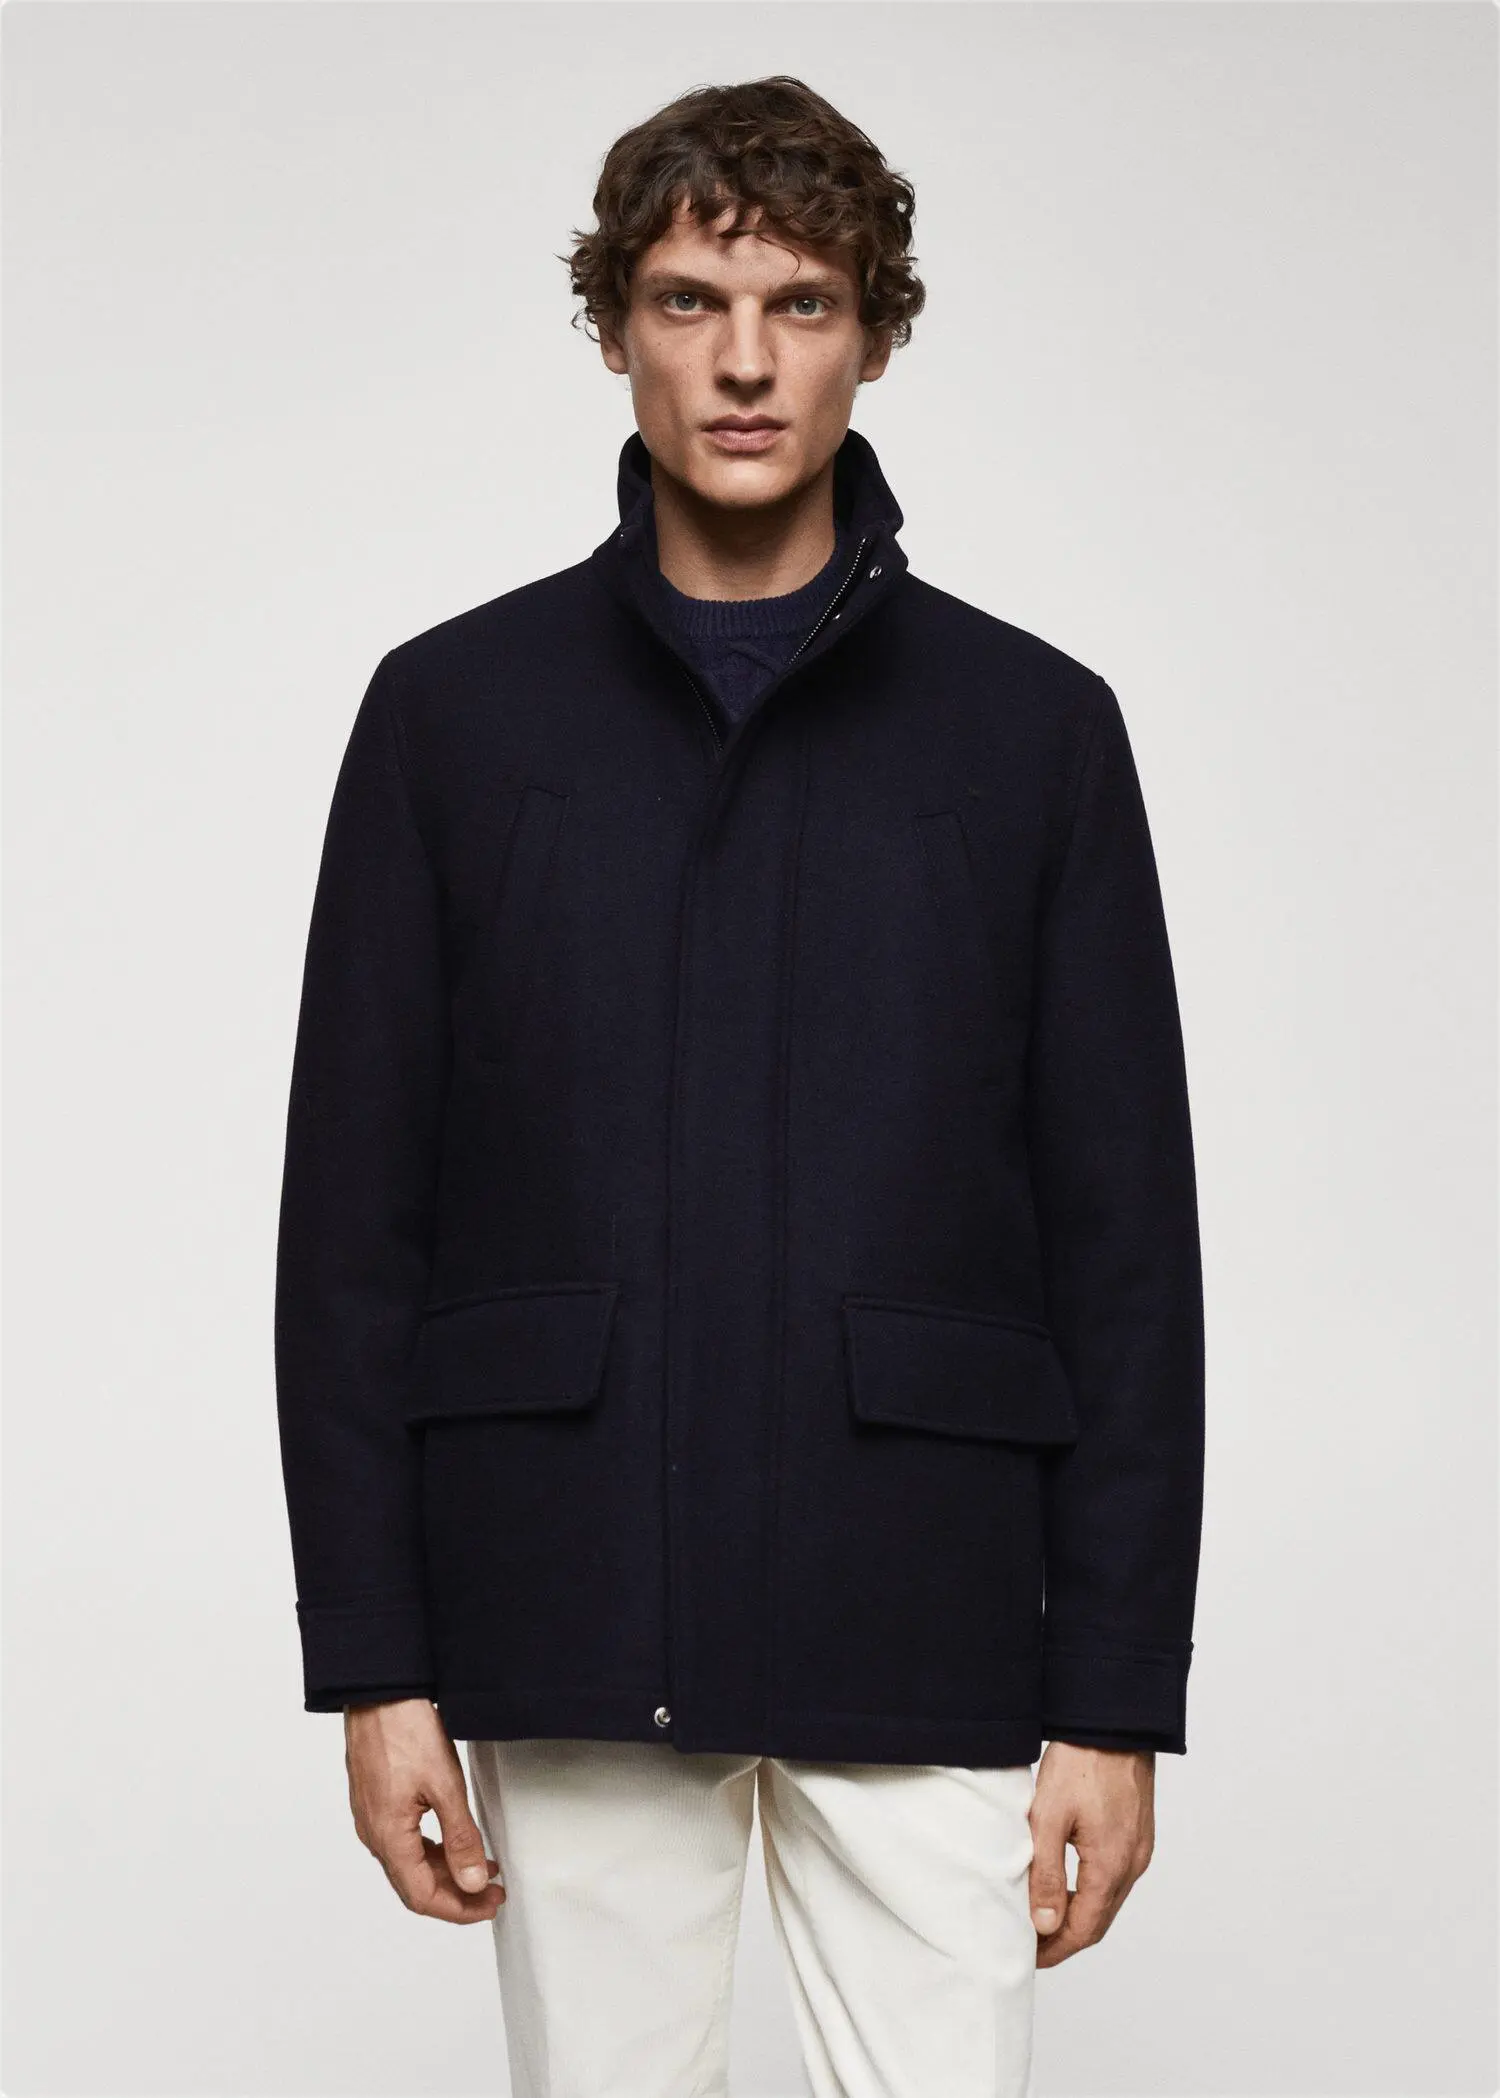 Mango Short wool coat with pockets. 2